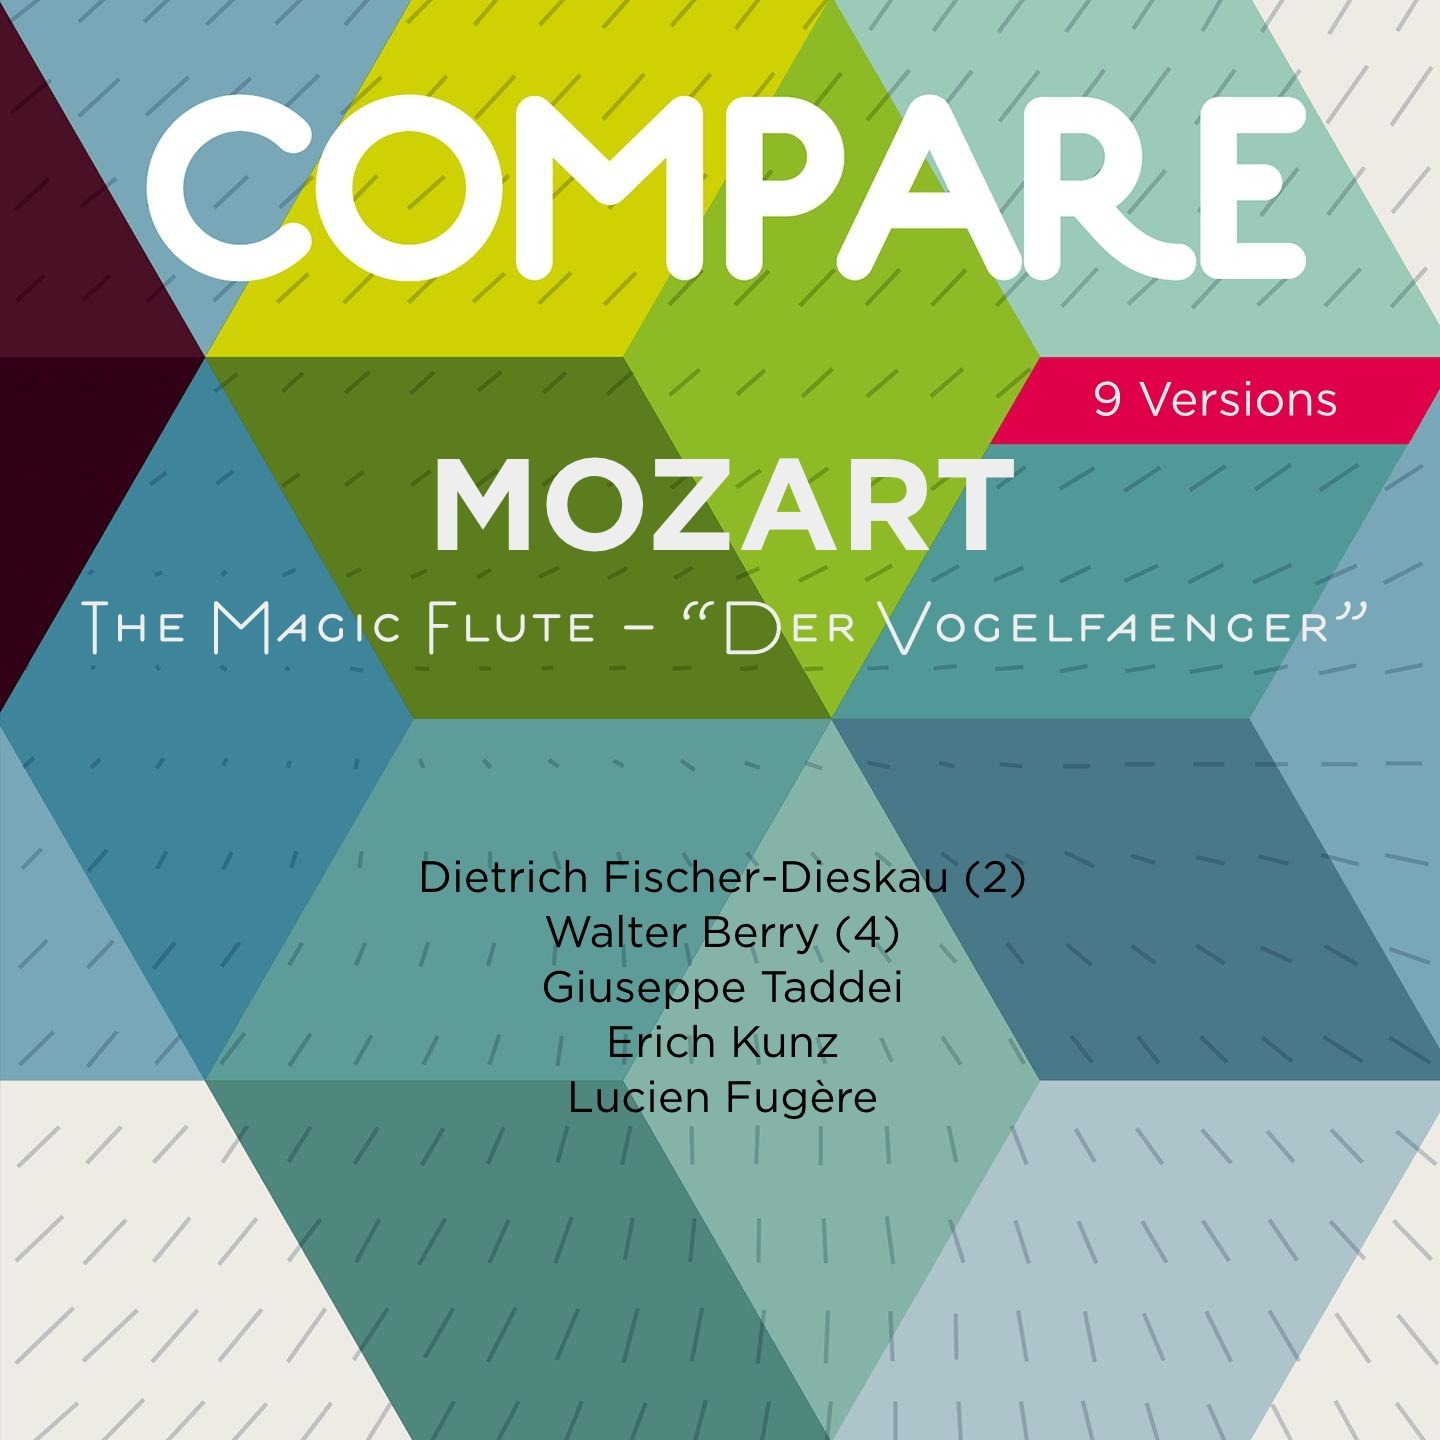 Mozart: The Magic Flute " Der Vogelf nger bin ich ja", Dietrich FischerDieskau vs. Walter Berry vs. Giuseppe Taddei vs. Erich Kunz vs. Lucien Fuge re Compare 9 Versions